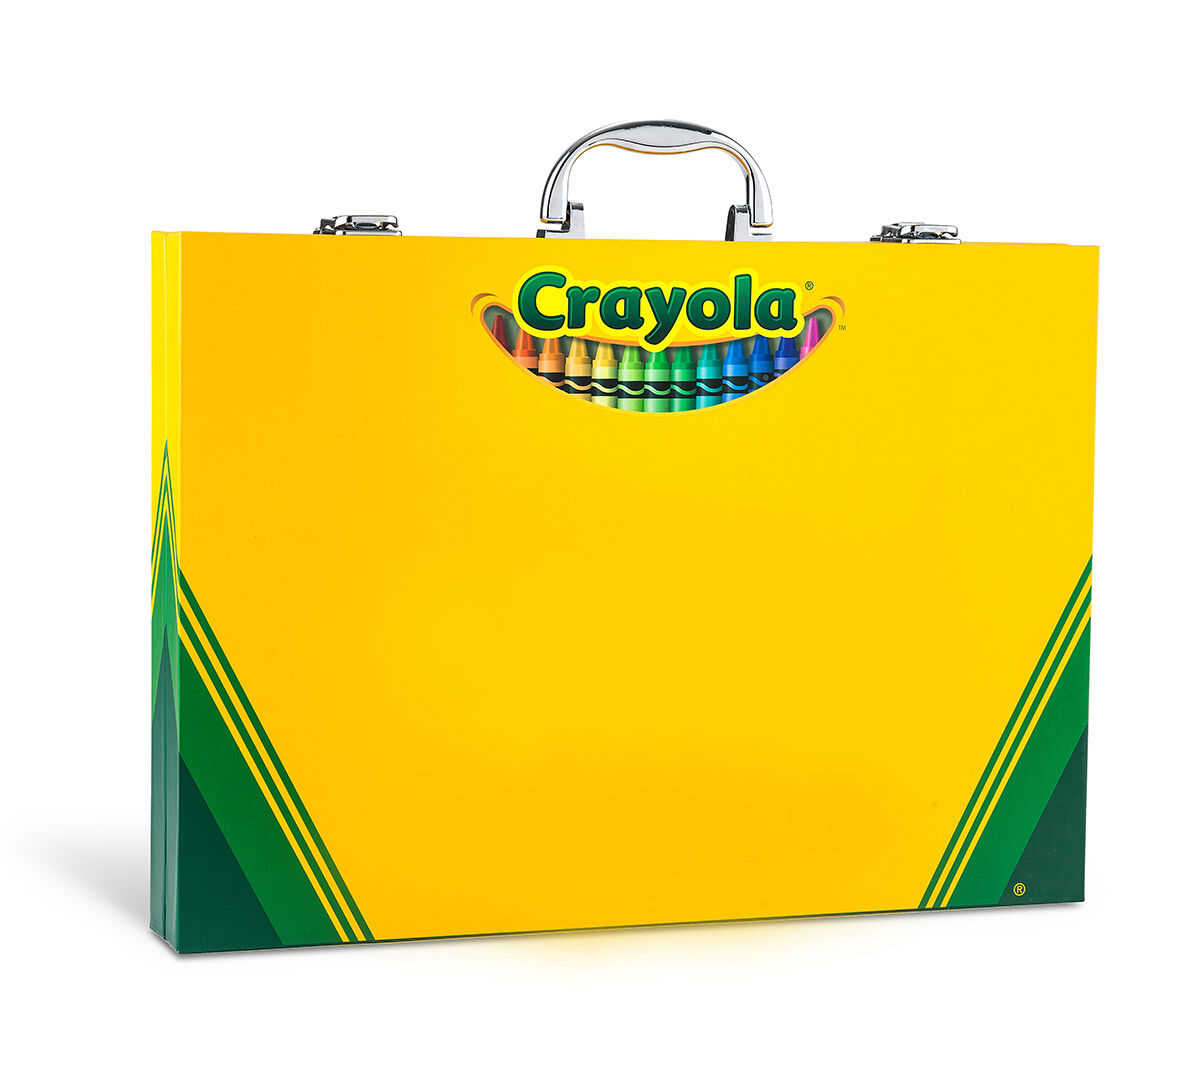 http://shop.crayola.com/dw/image/v2/AALB_PRD/on/demandware.static/-/Sites-crayola-storefront/default/dwf6d01a90/images/PersonalizeArtCase.jpg?sw=1200&sh=1200&sm=fit&sfrm=jpg